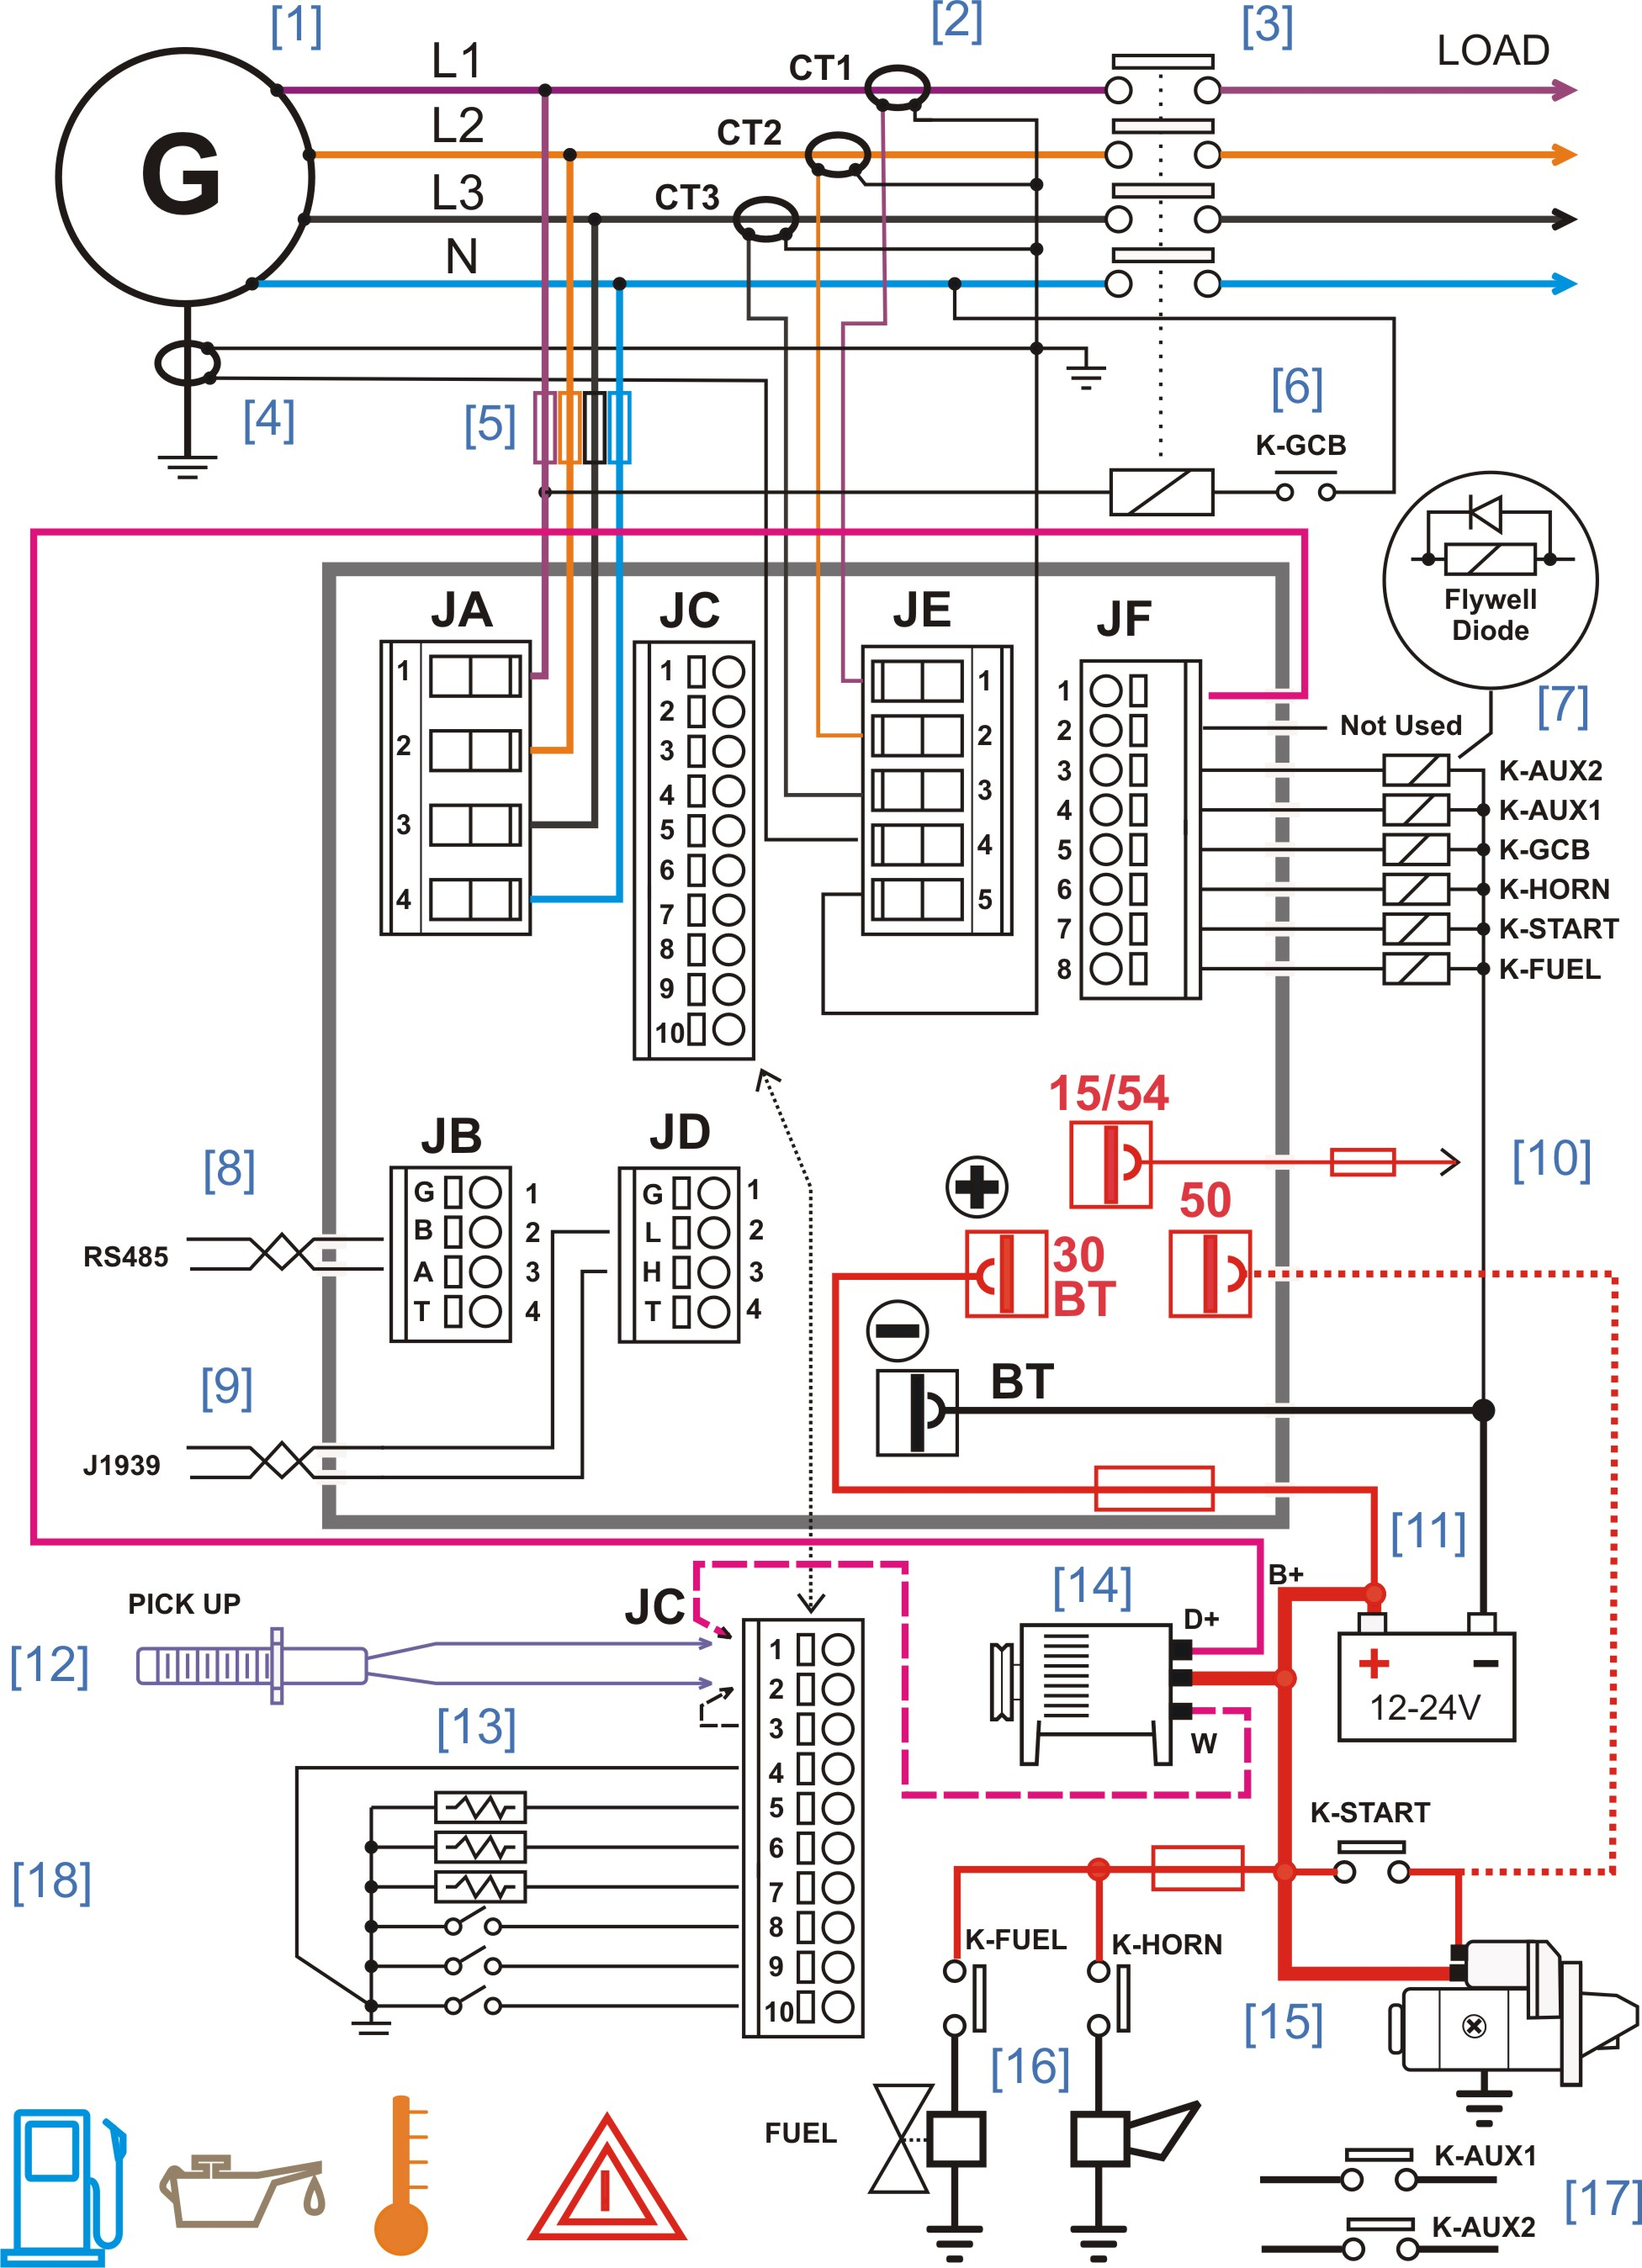 Connection Diagram Olympian Generator - Data Wiring Diagram Schematic - Wiring Diagram Maker